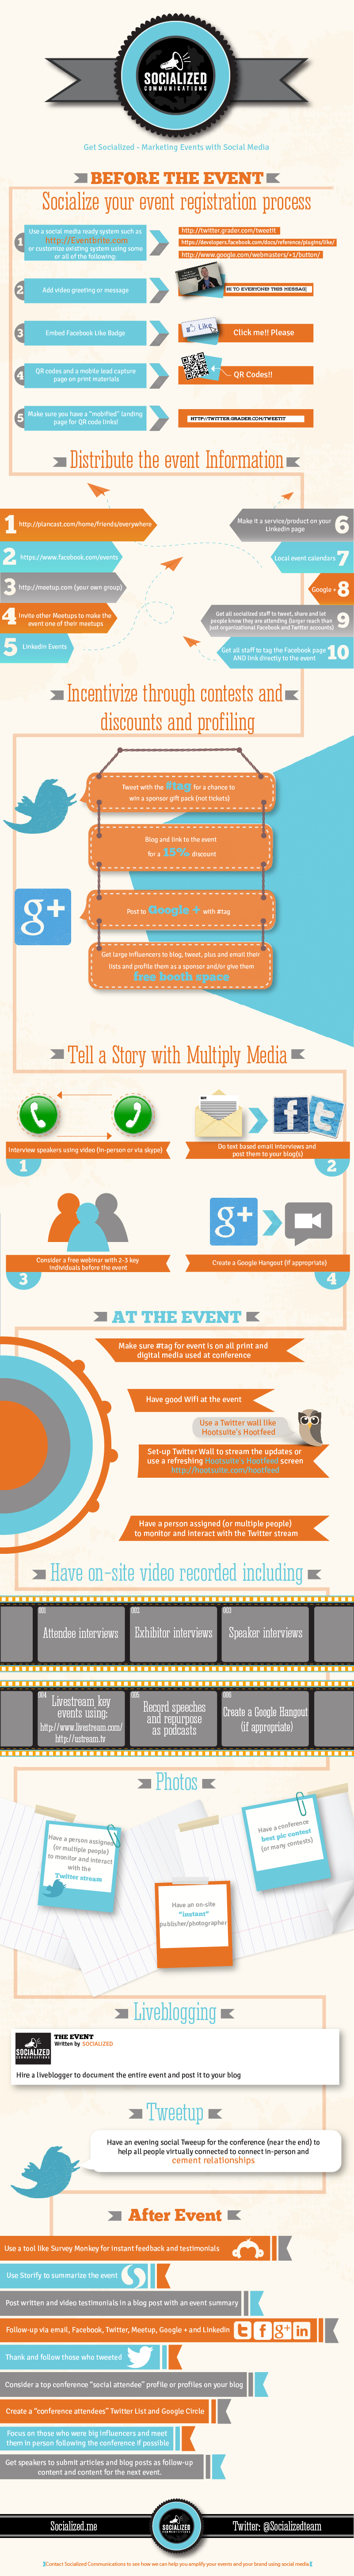 Marketing Events Using Social Media Template